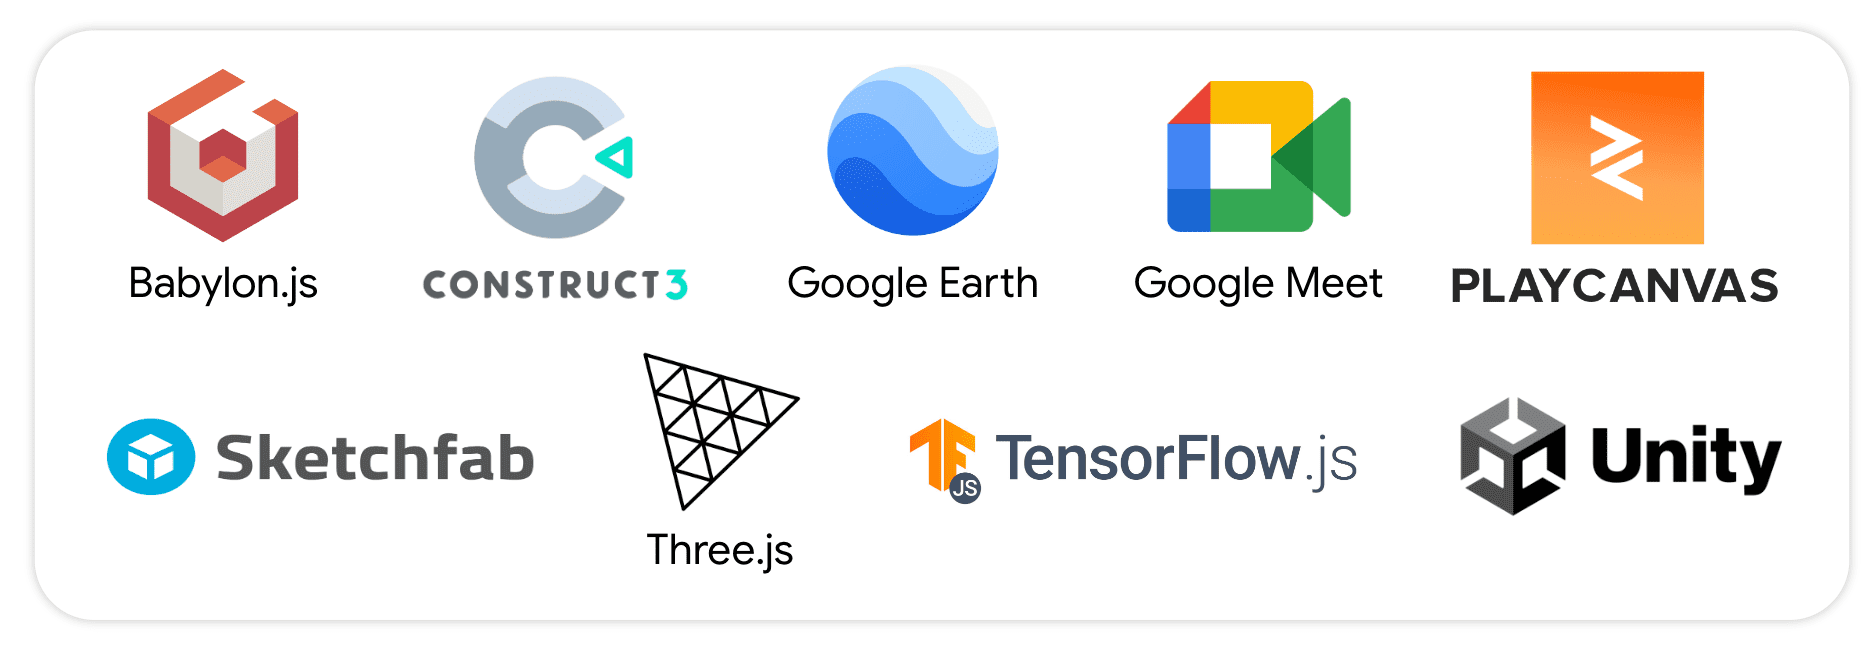 Babylon.js, Construct 3, Google Earth, Google Meet, PlayCanvas, Sketchfab, Three.JS, TensorFlow.js ו-Unity.